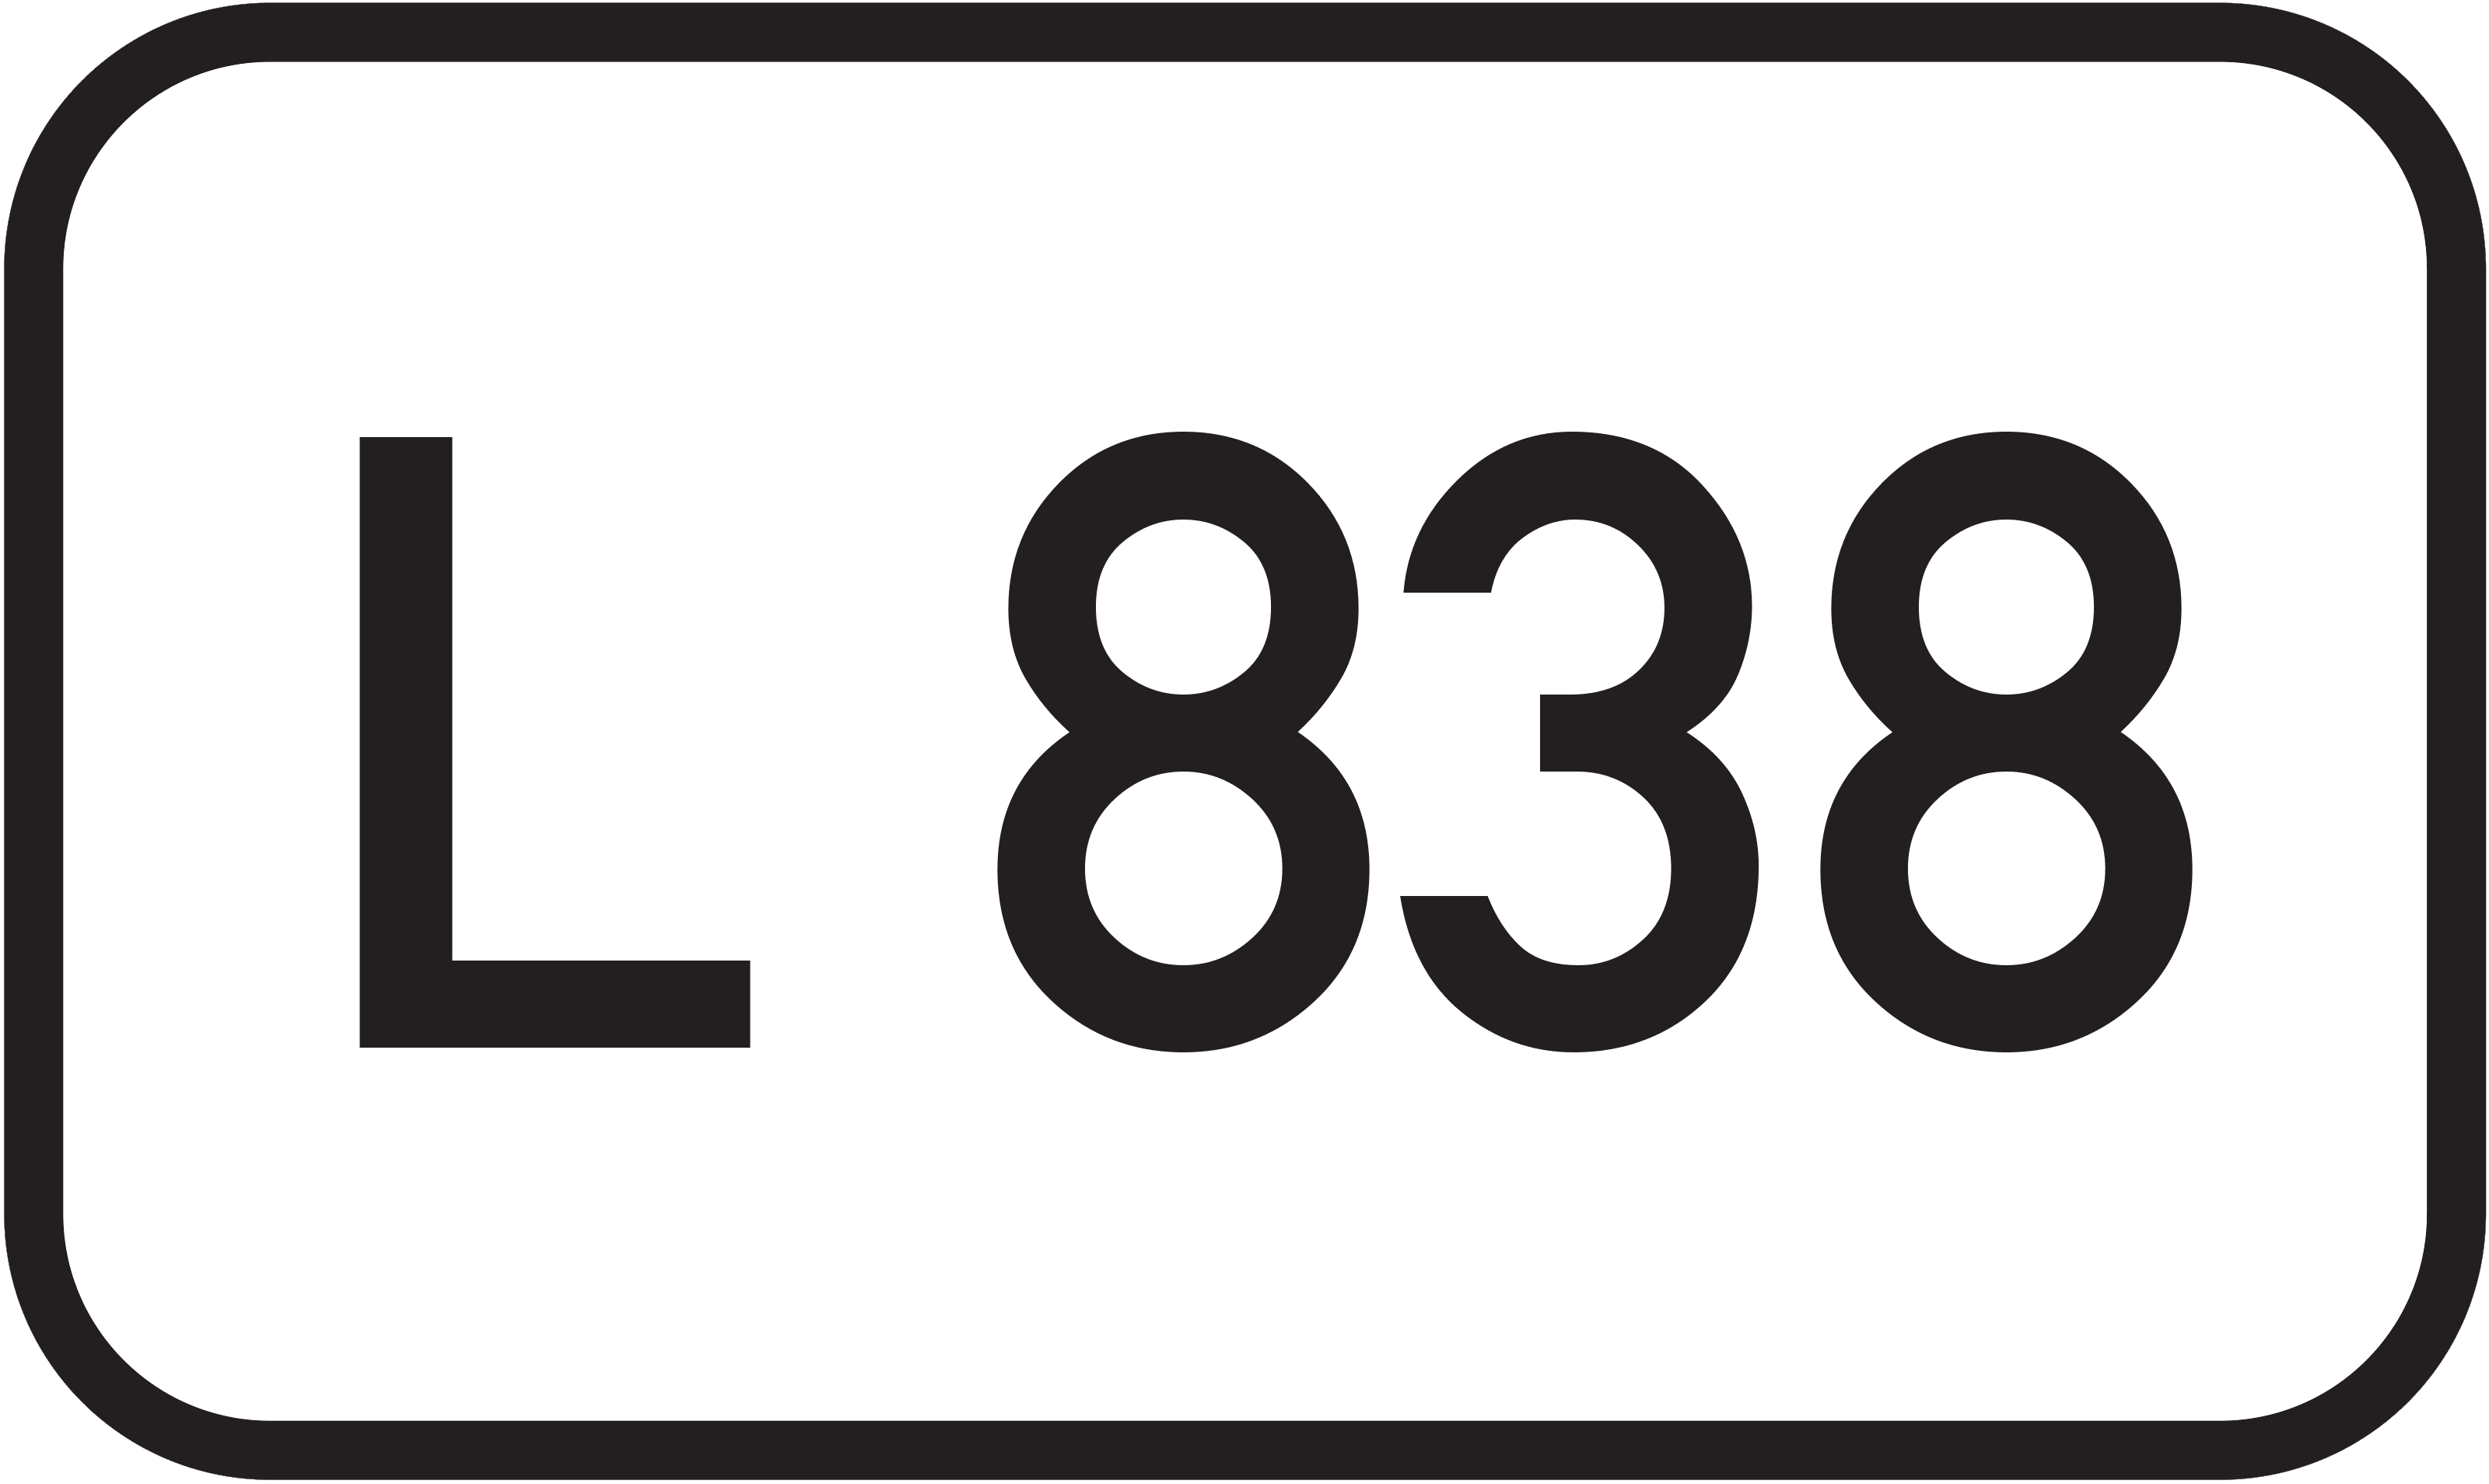 Straßenschild Landesstraße L 838